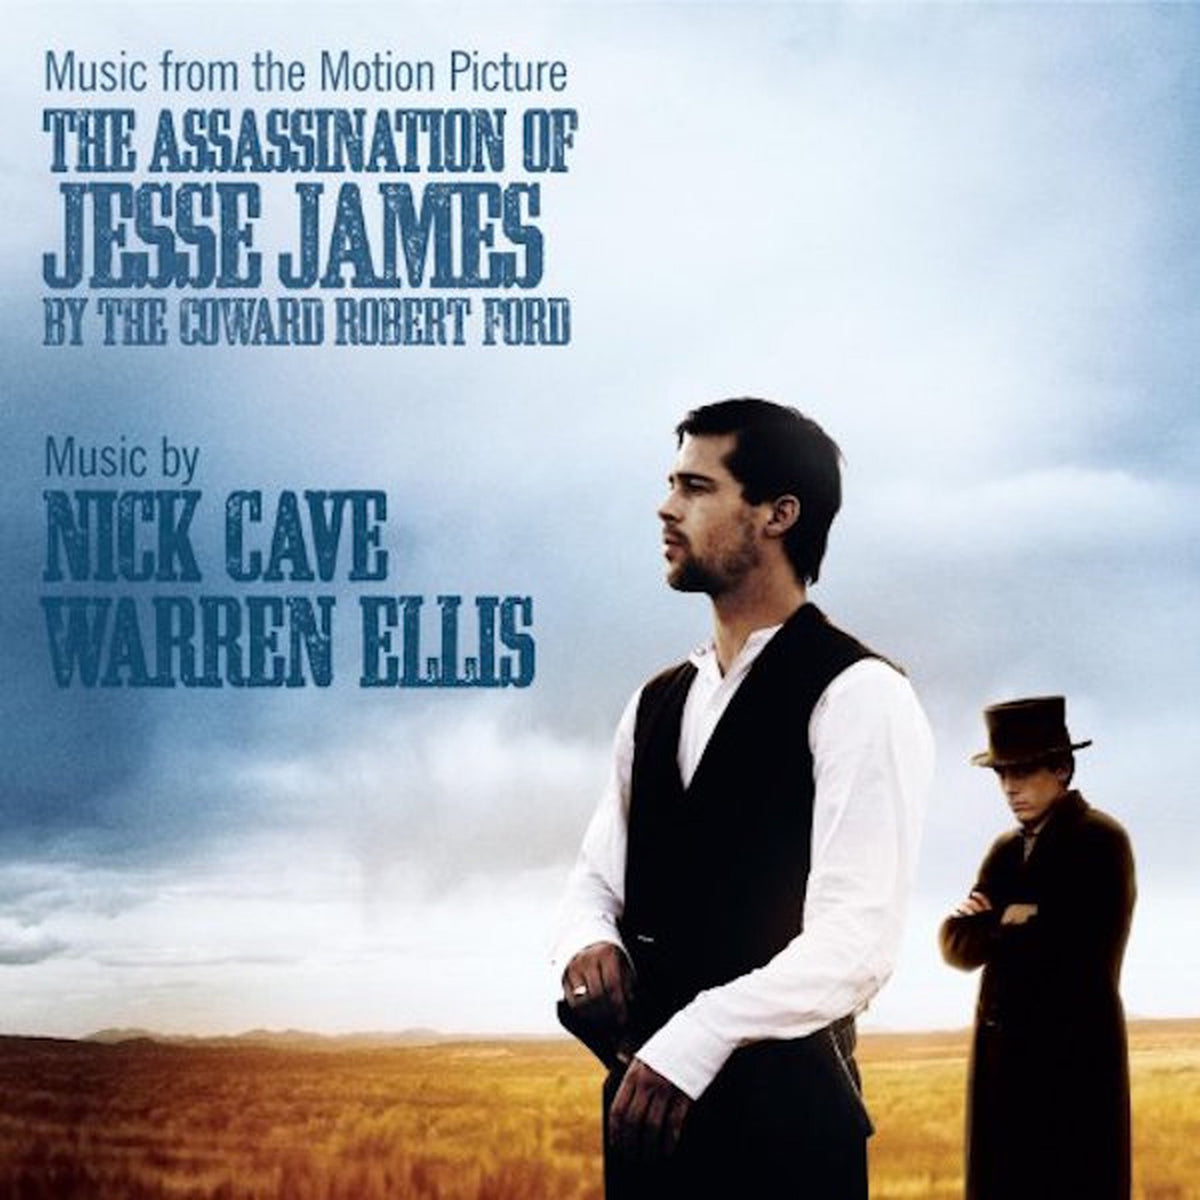 Nick Cave And Warren Ellis - The Assassination Of Jesse James (OST)